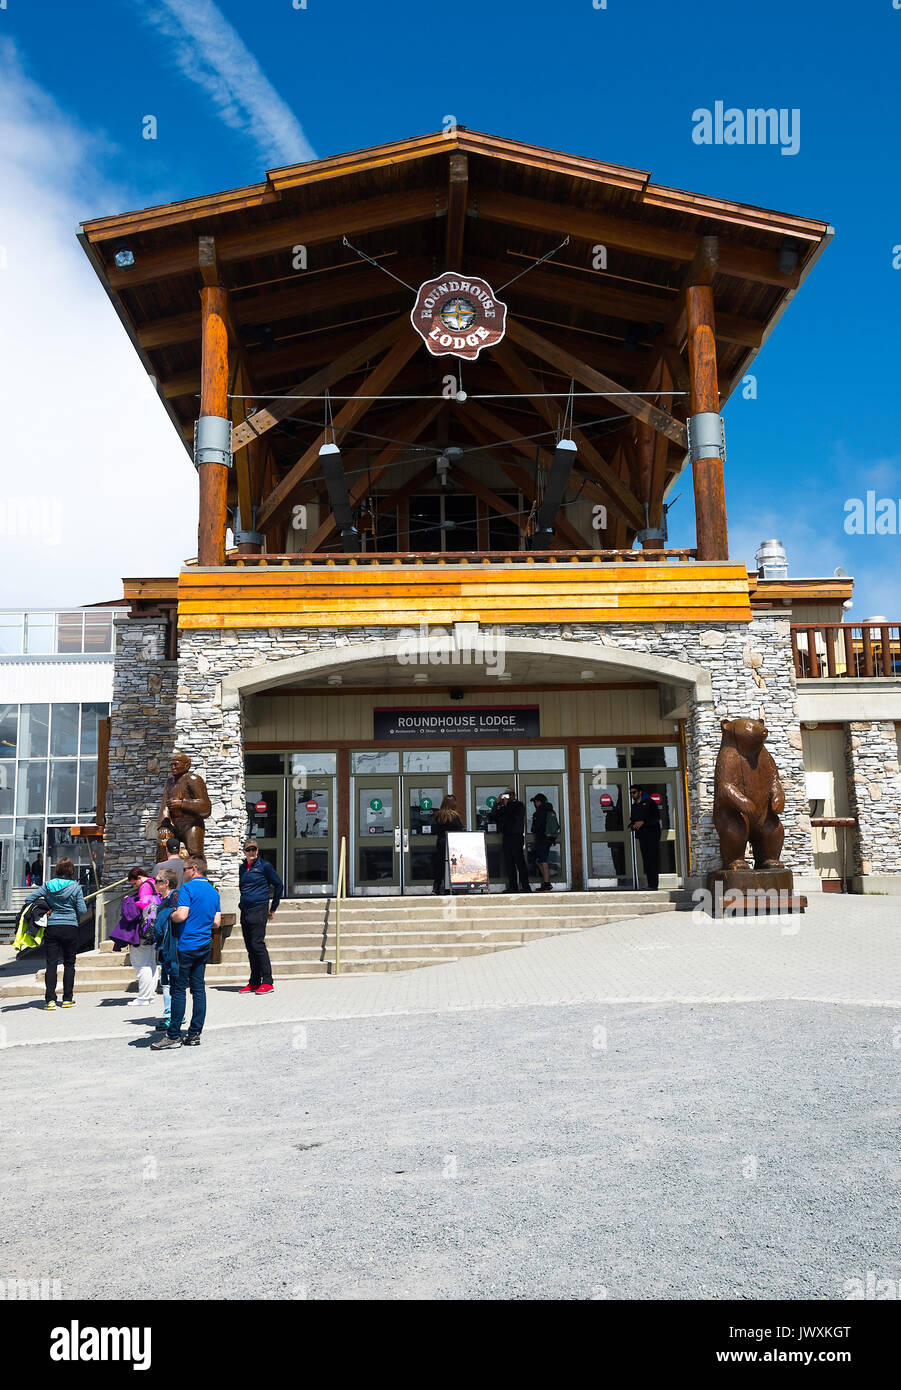 Le Roundhouse Lodge et terrasse avec terrasse d'observation à Whistler Mountain Ski Resort Whistler British Columbia Canada Banque D'Images